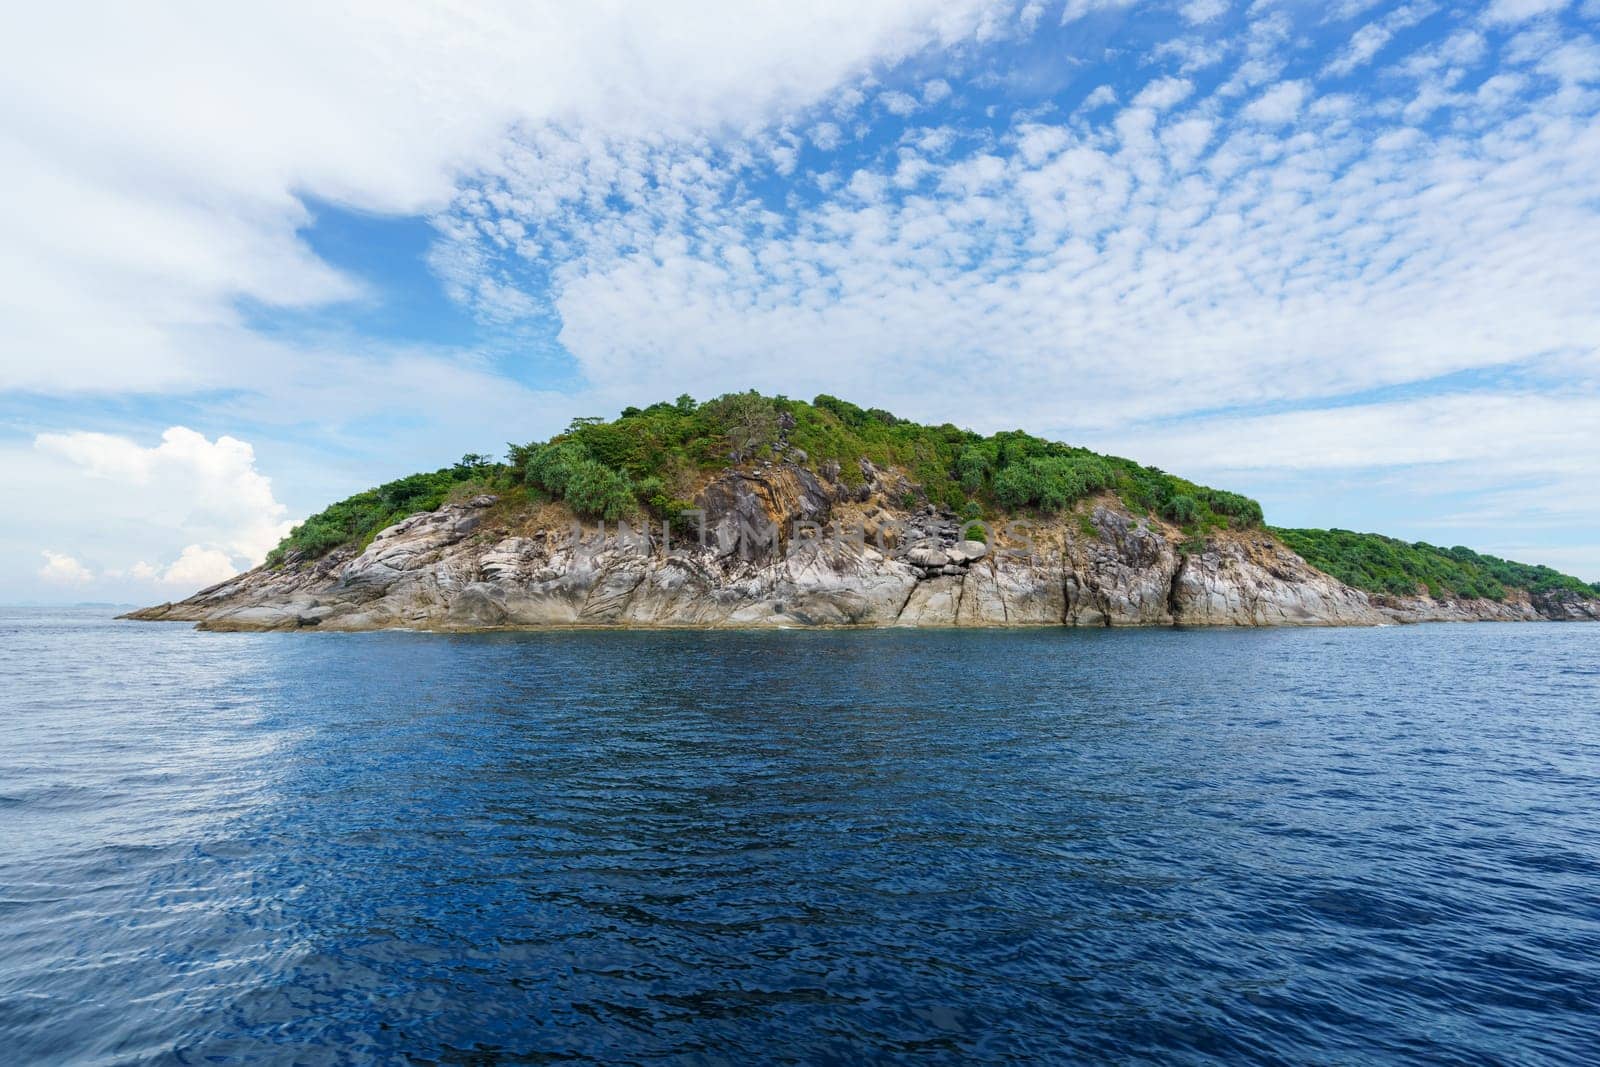 Beautiful seascape - tropical island in ocean by rivertime